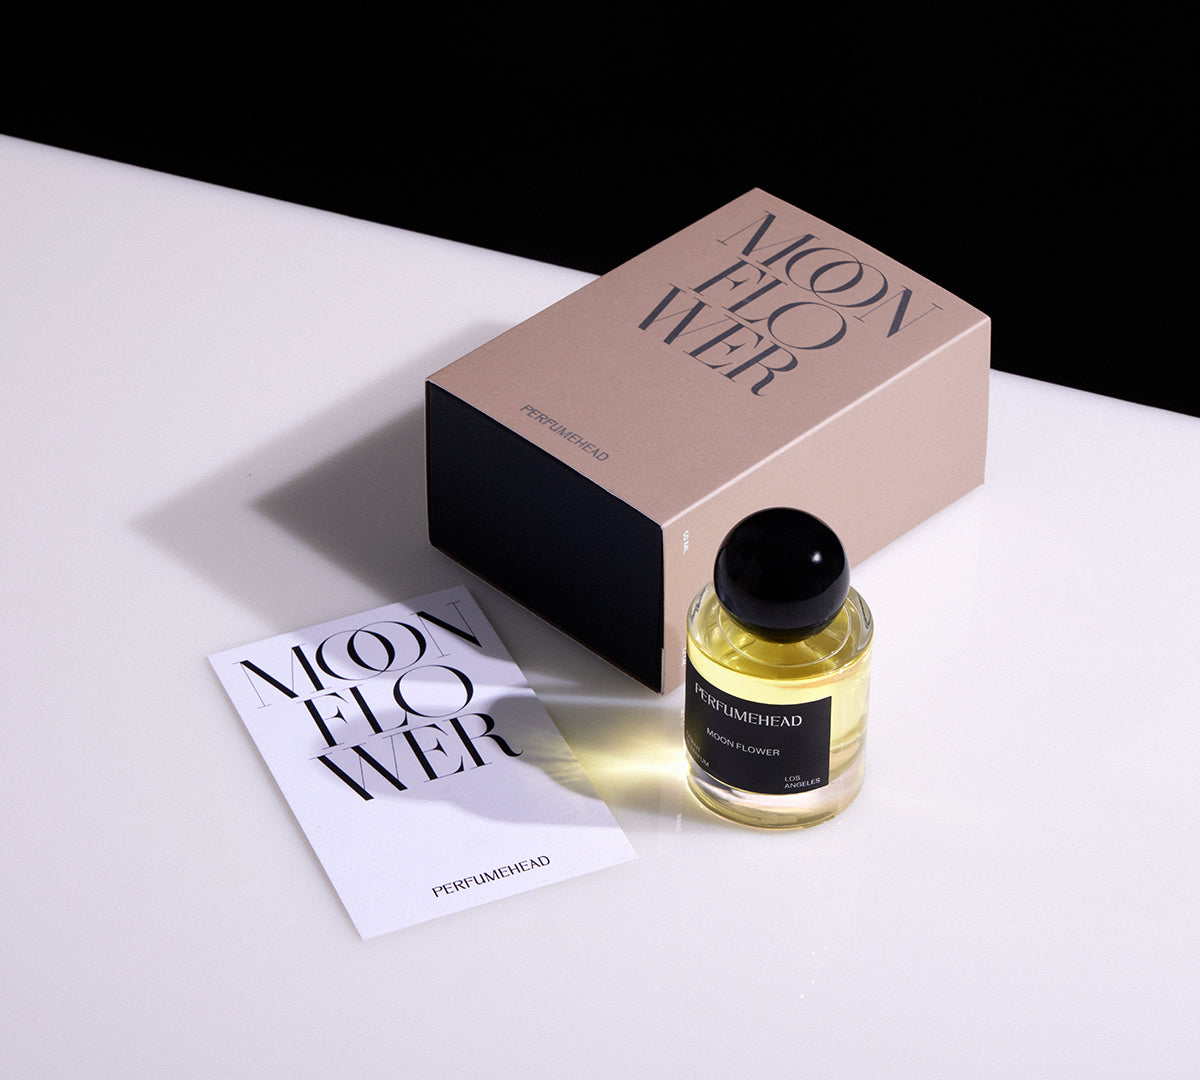 Moon Flower extrait de parfum 50ml signature spray bottle, box and typography